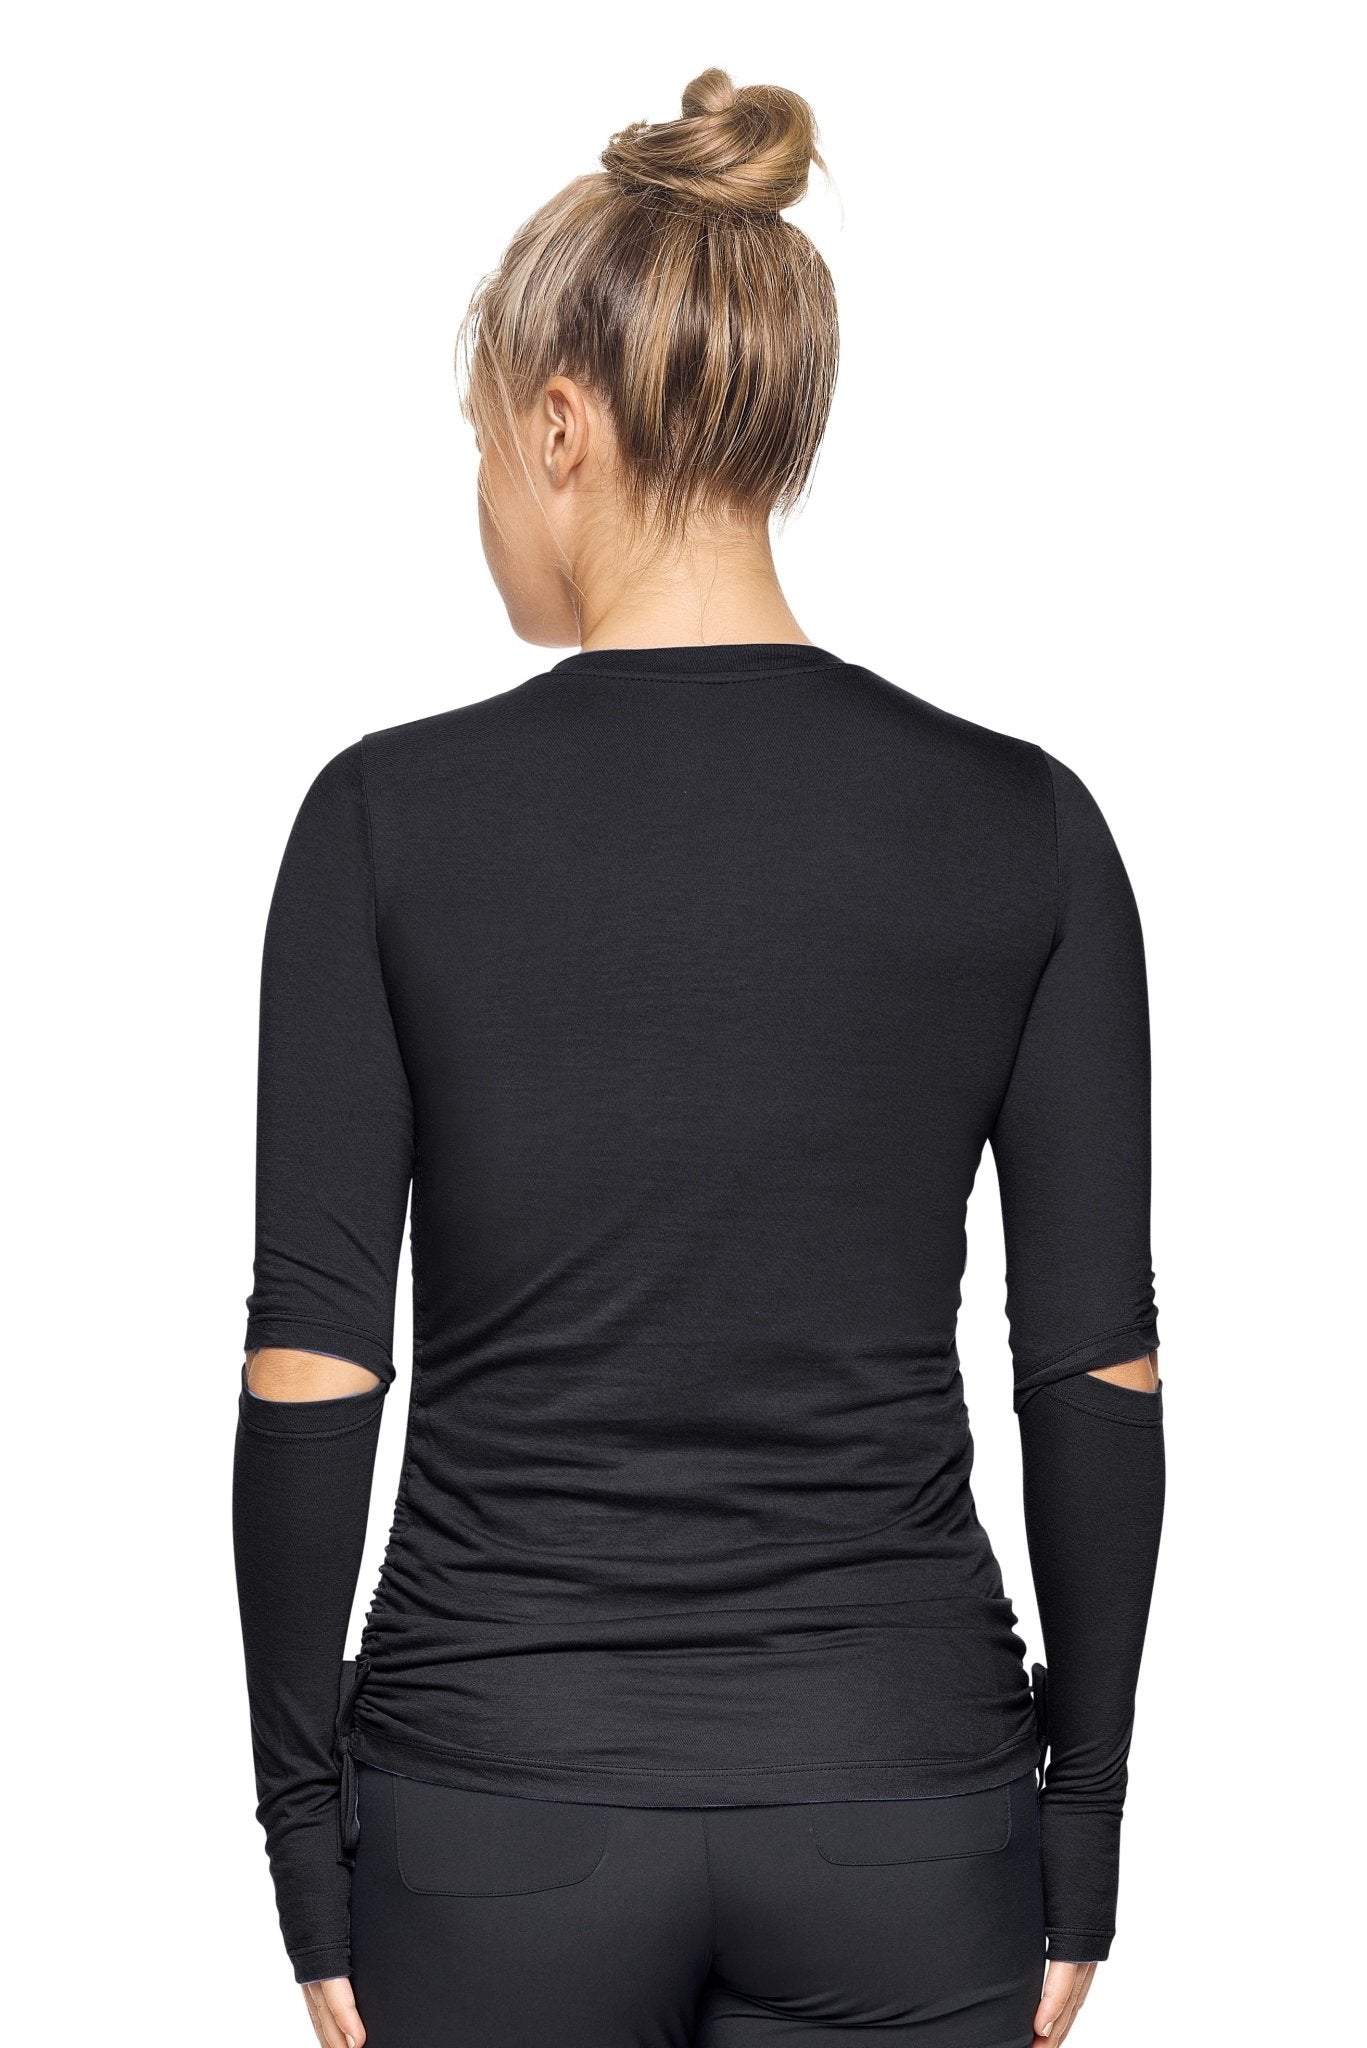 Expert Brand MoCA Plant Based Long Sleeve V-Neck Shirt - DressbarnActivewear